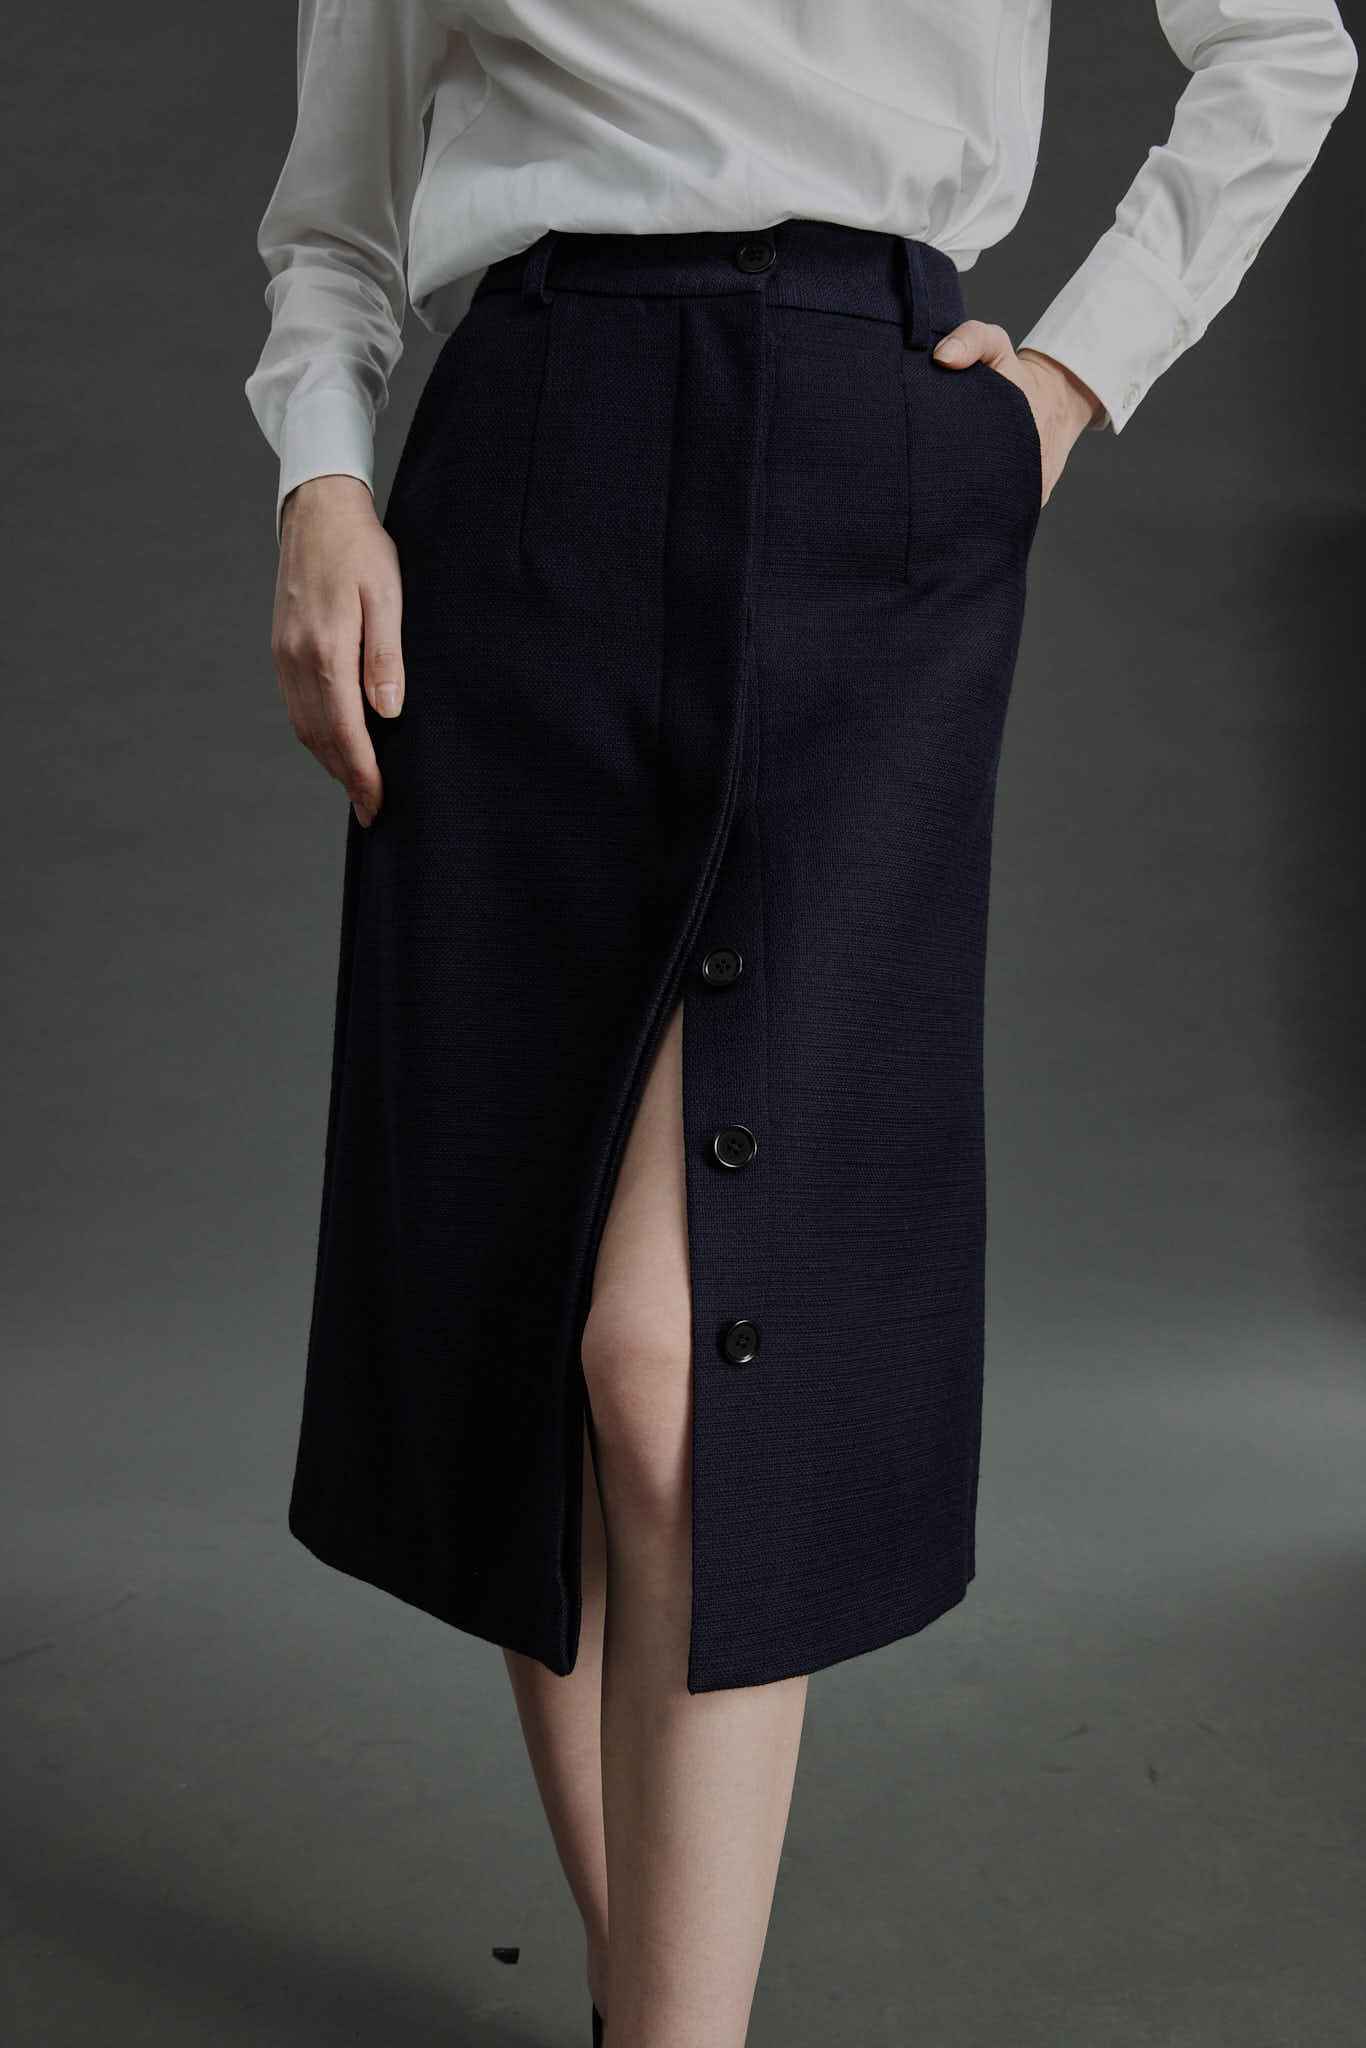 Fafe Skirt – A-line skirt in blue basketweave